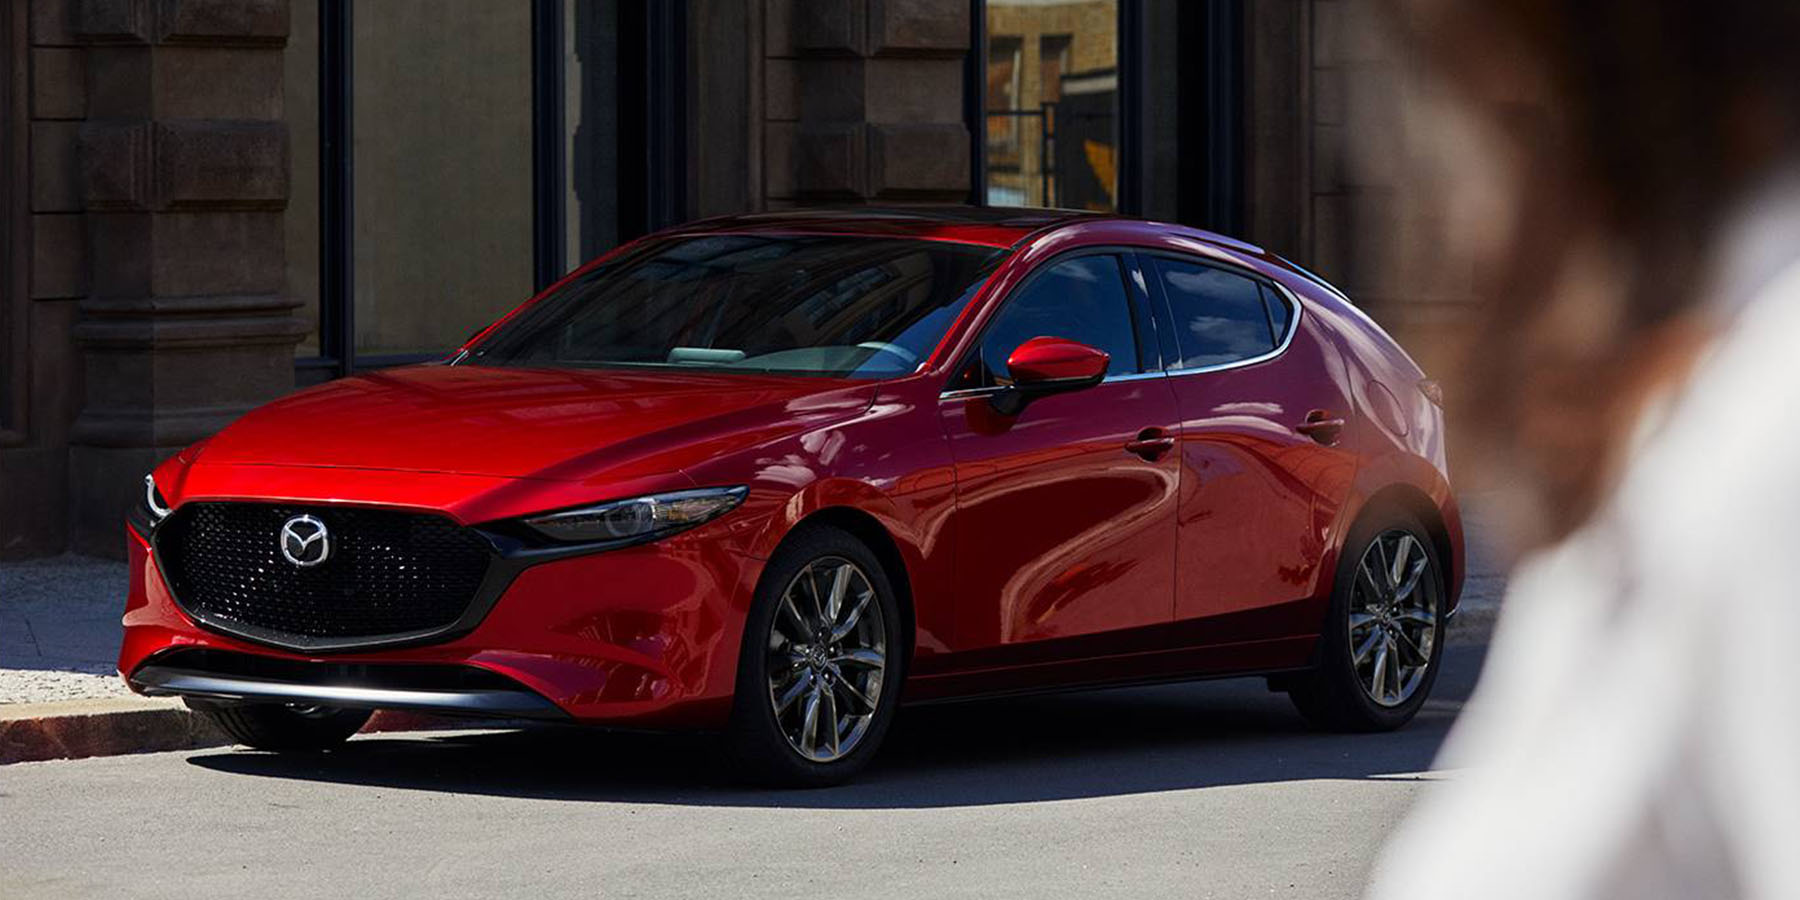 2019 Mazda 3 Hatchback Compact Car 1 Copy